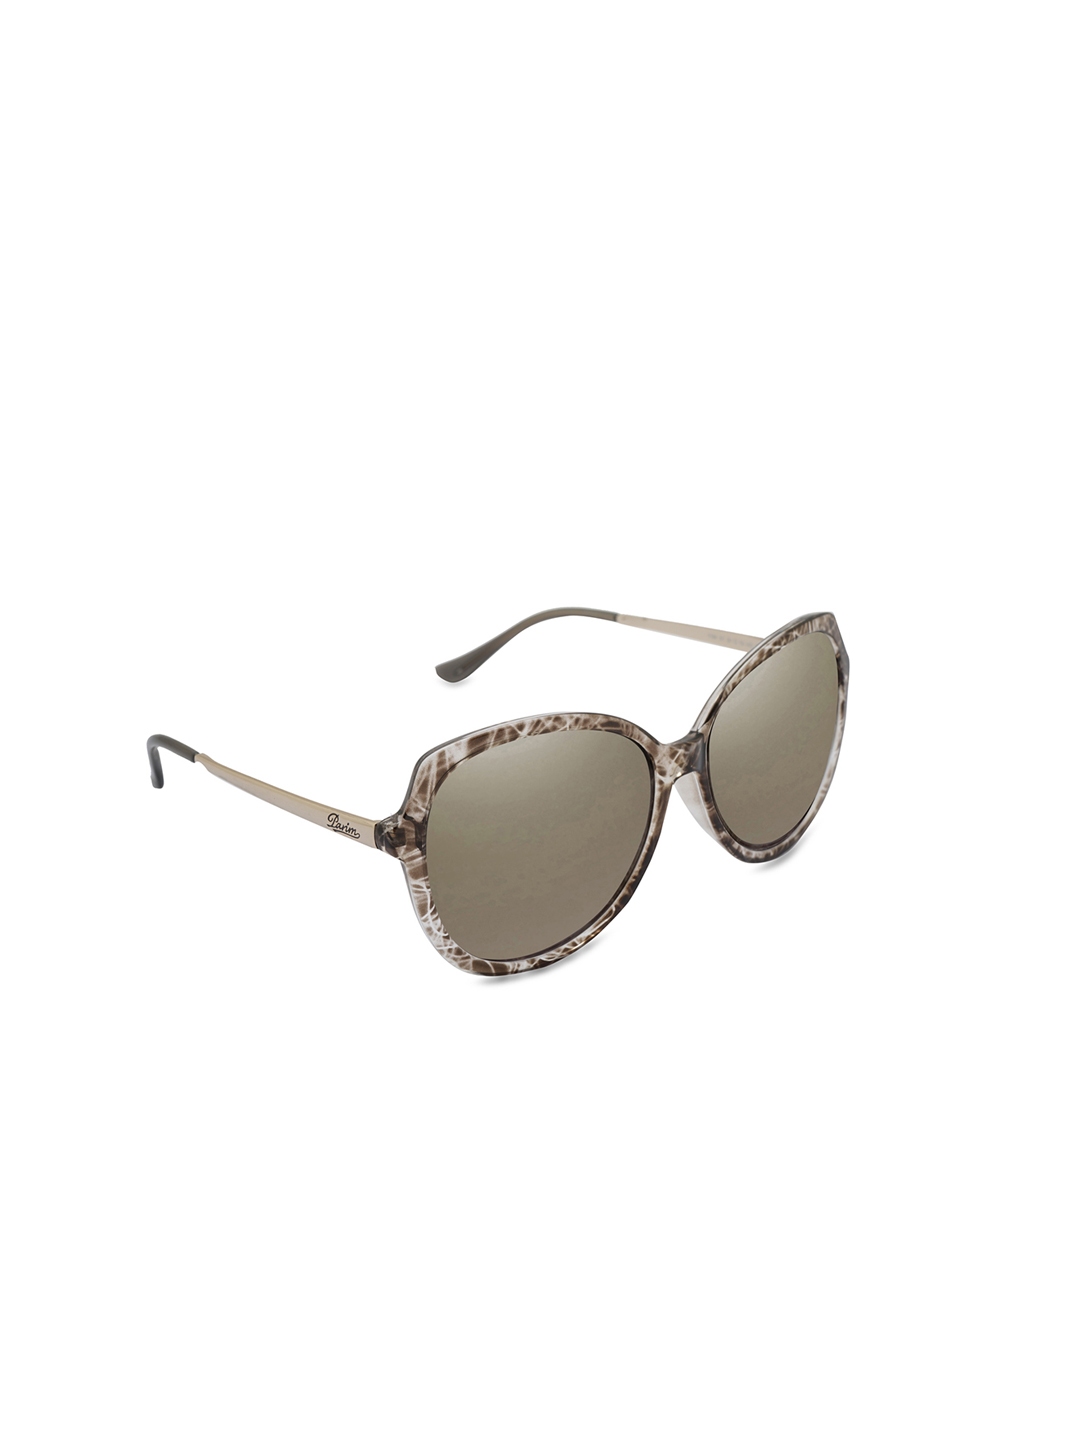 Buy PARIM Polarized & UV Protected Large Aviator Sunglasses for